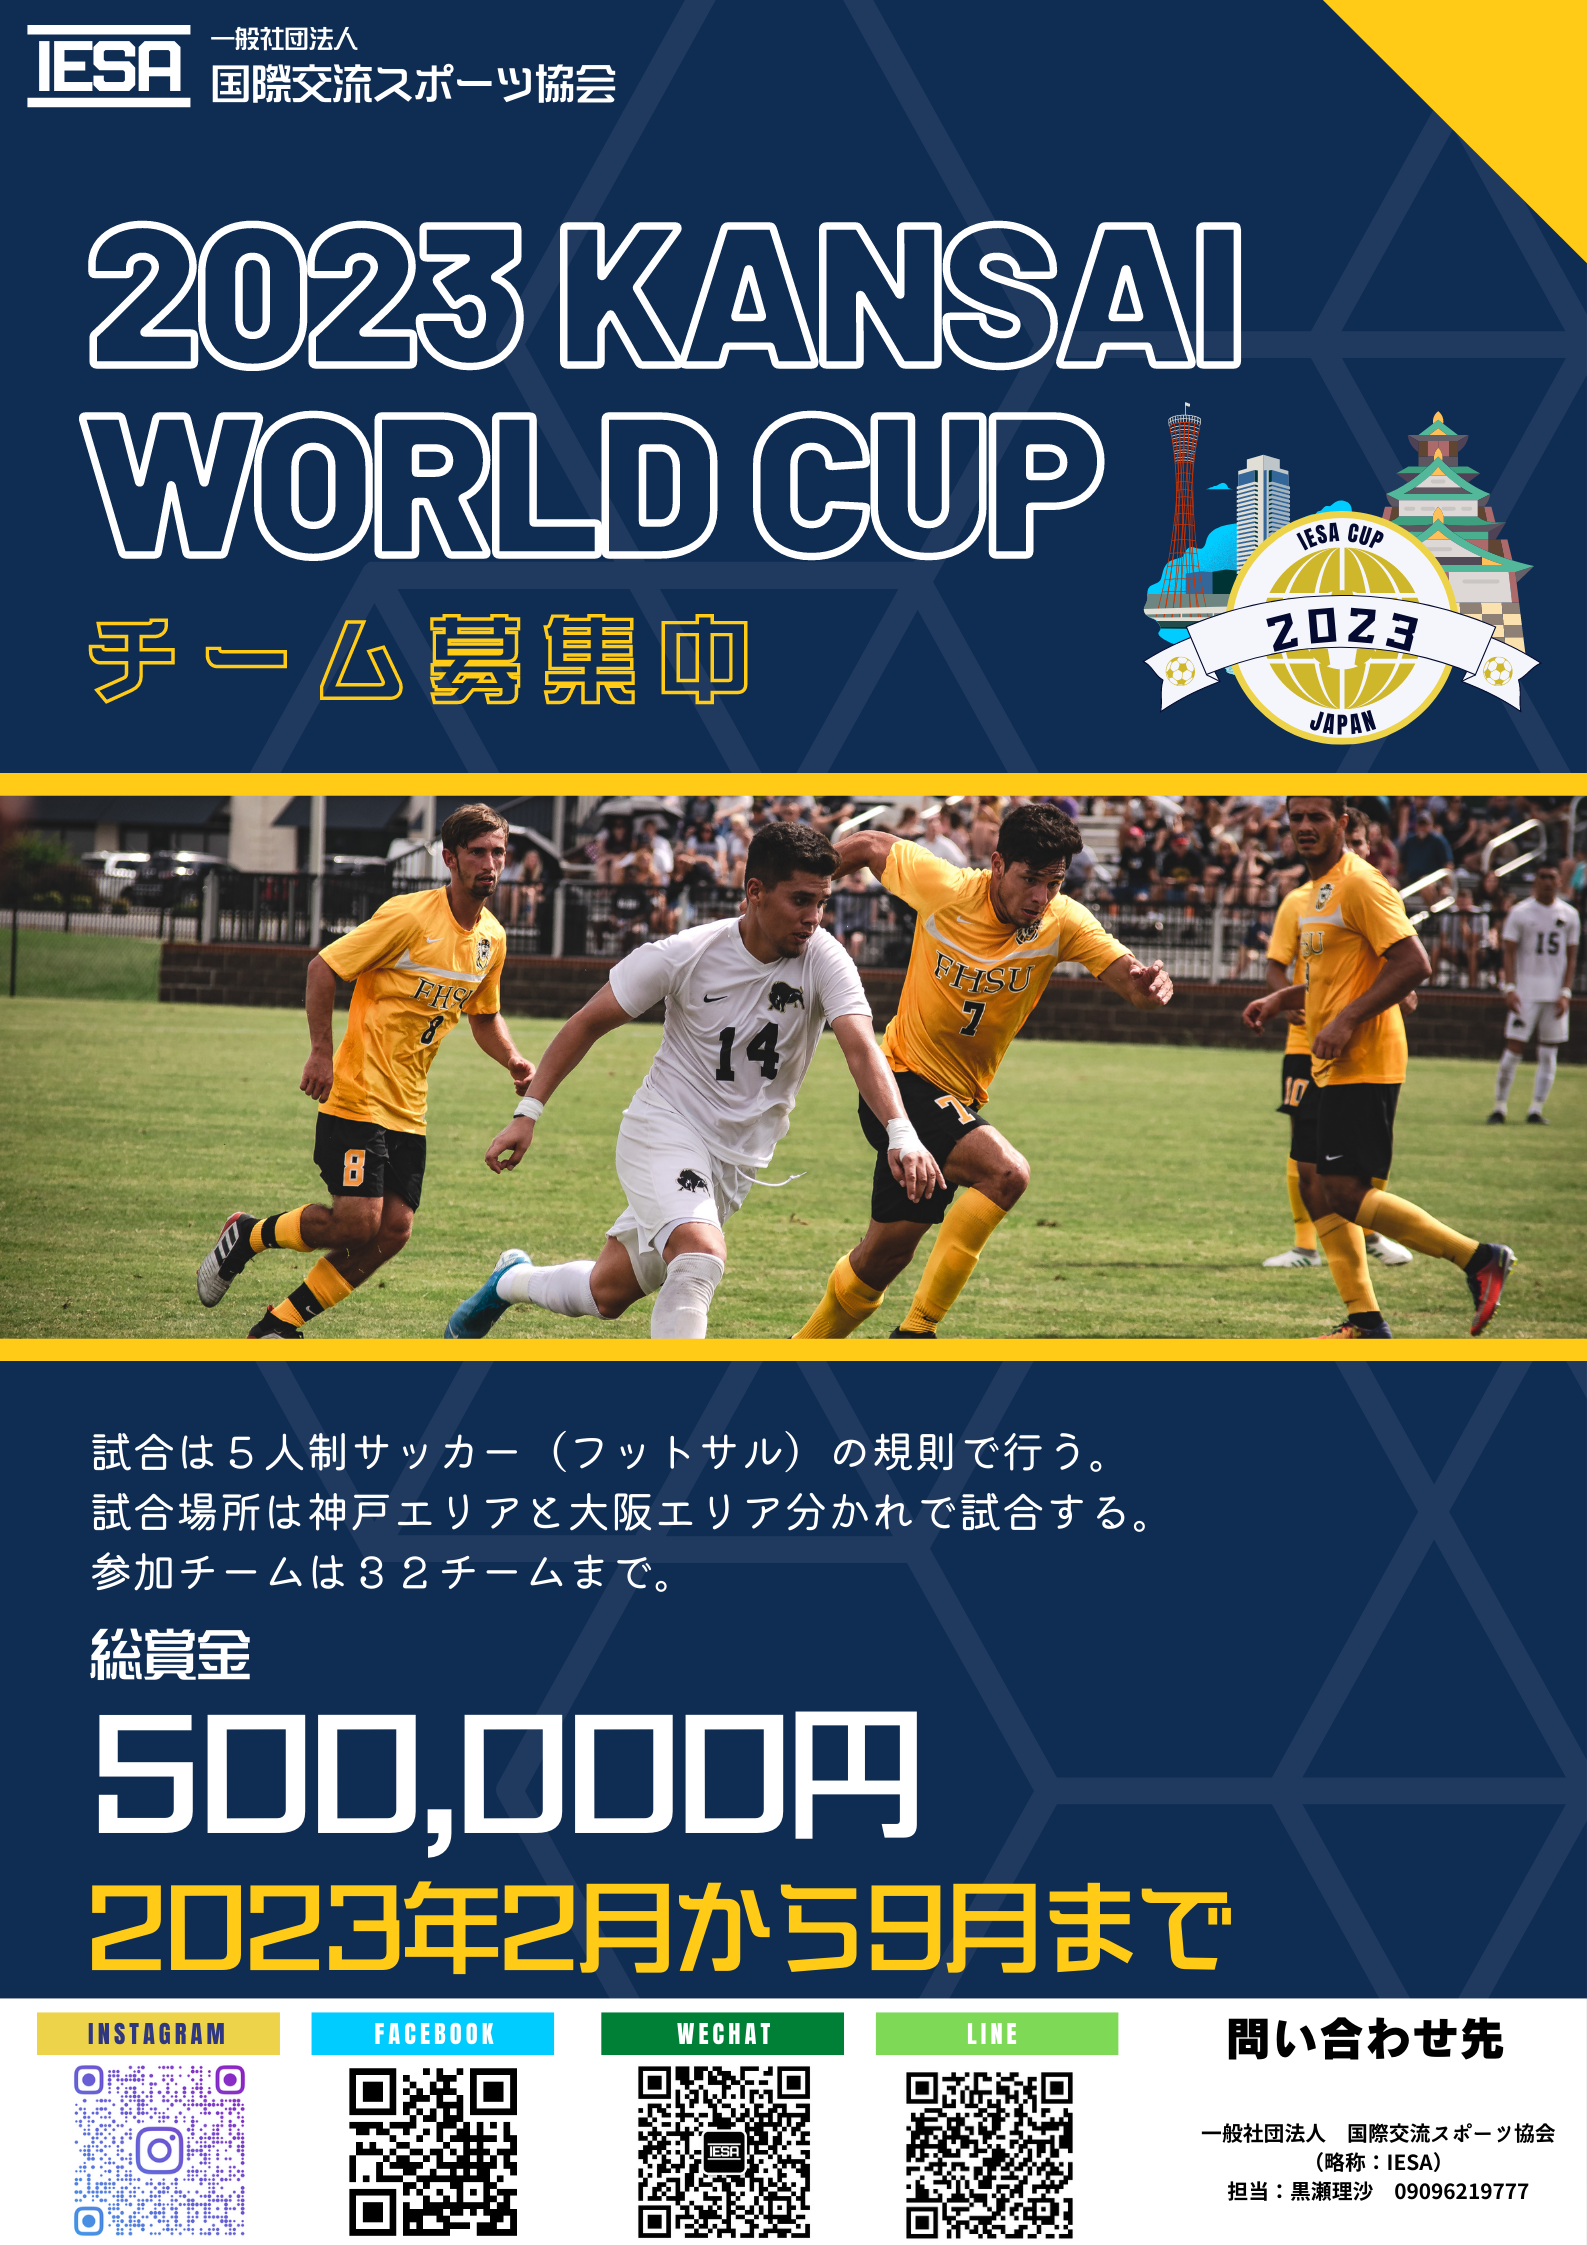 2023関西World Cup・Dream Cup | IESA 国際交流スポーツ協会